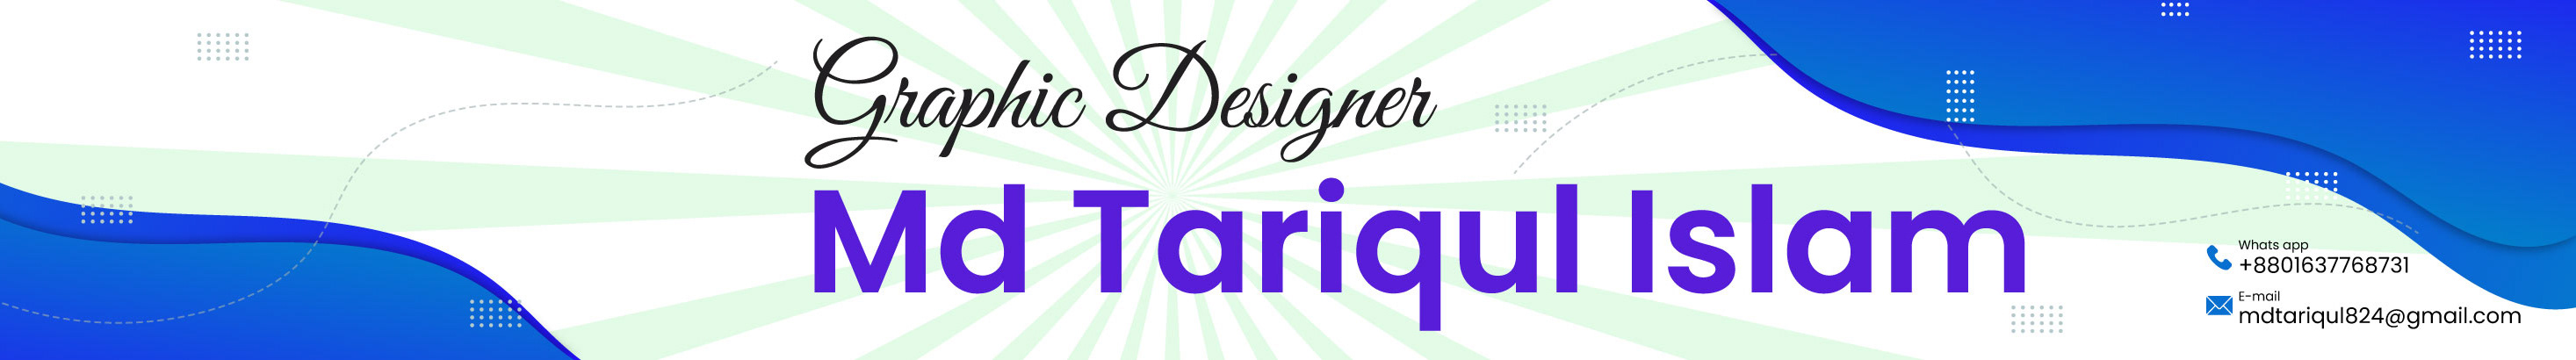 Md Tariqul Islam's profile banner